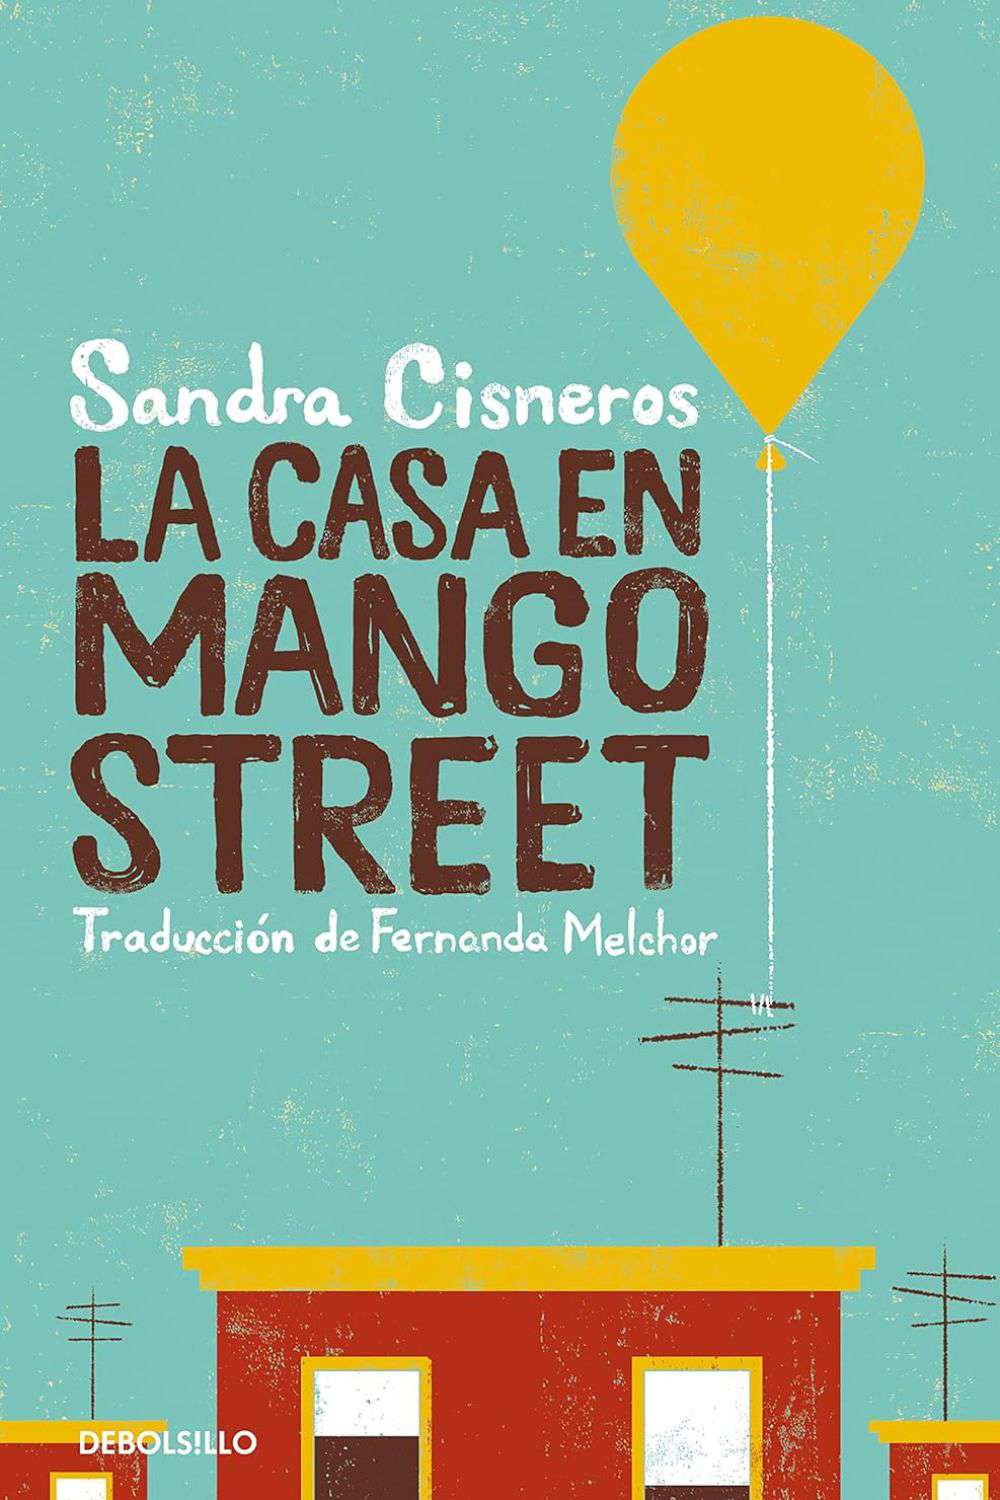 'La Casa en Mango Street' de Sandra Cisneros